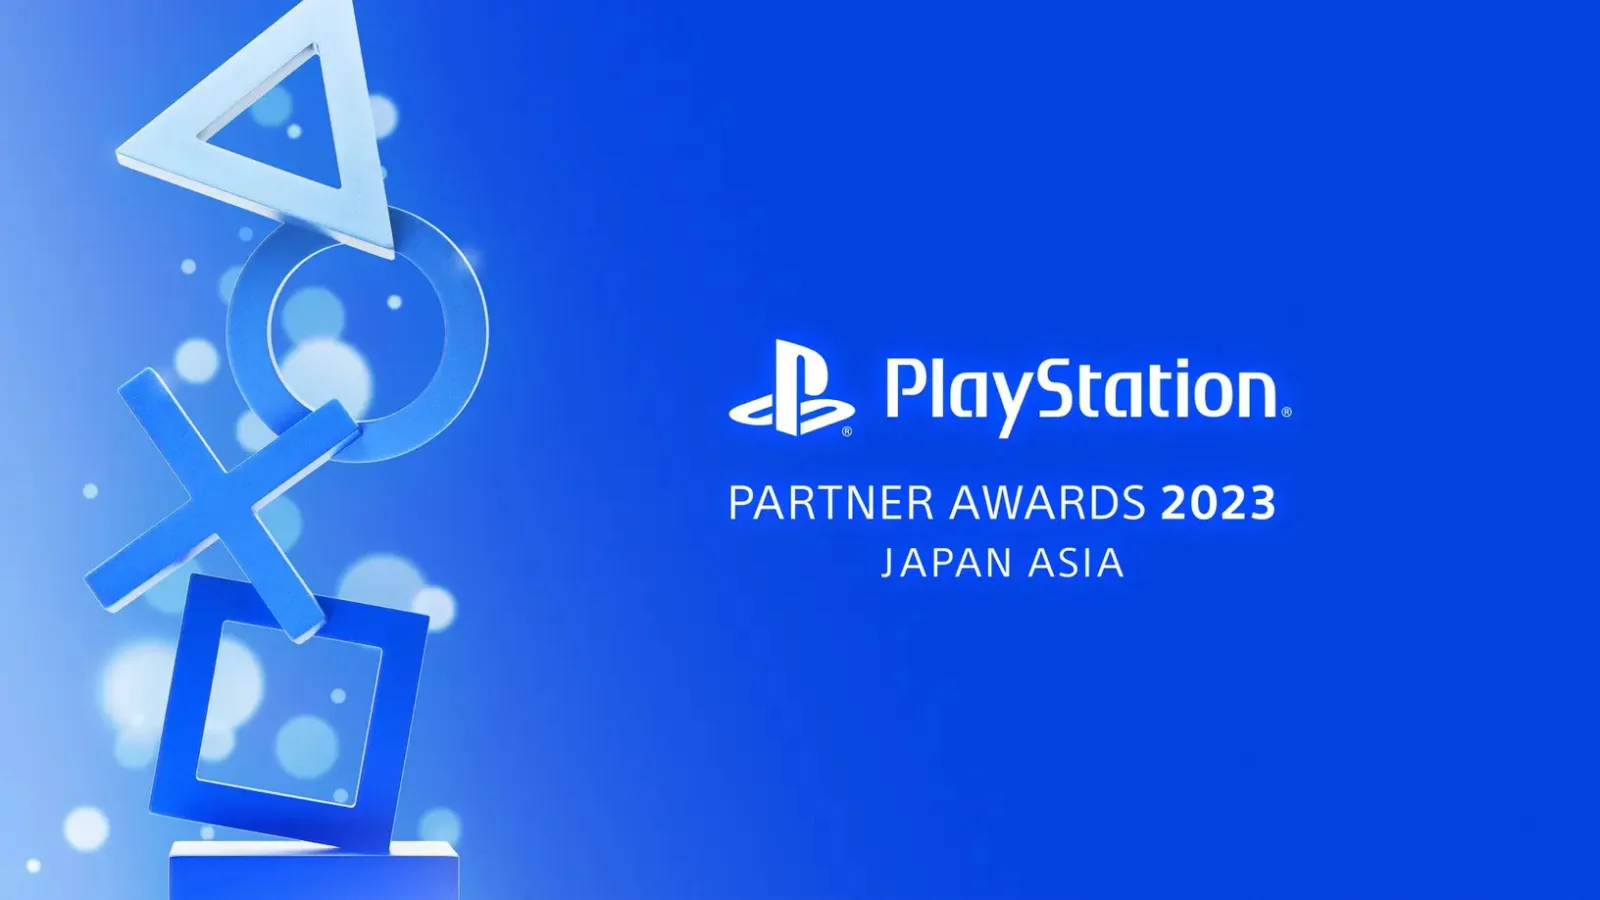 PlayStation Partner Awards 2023 Japan Asia将于12月1日举行